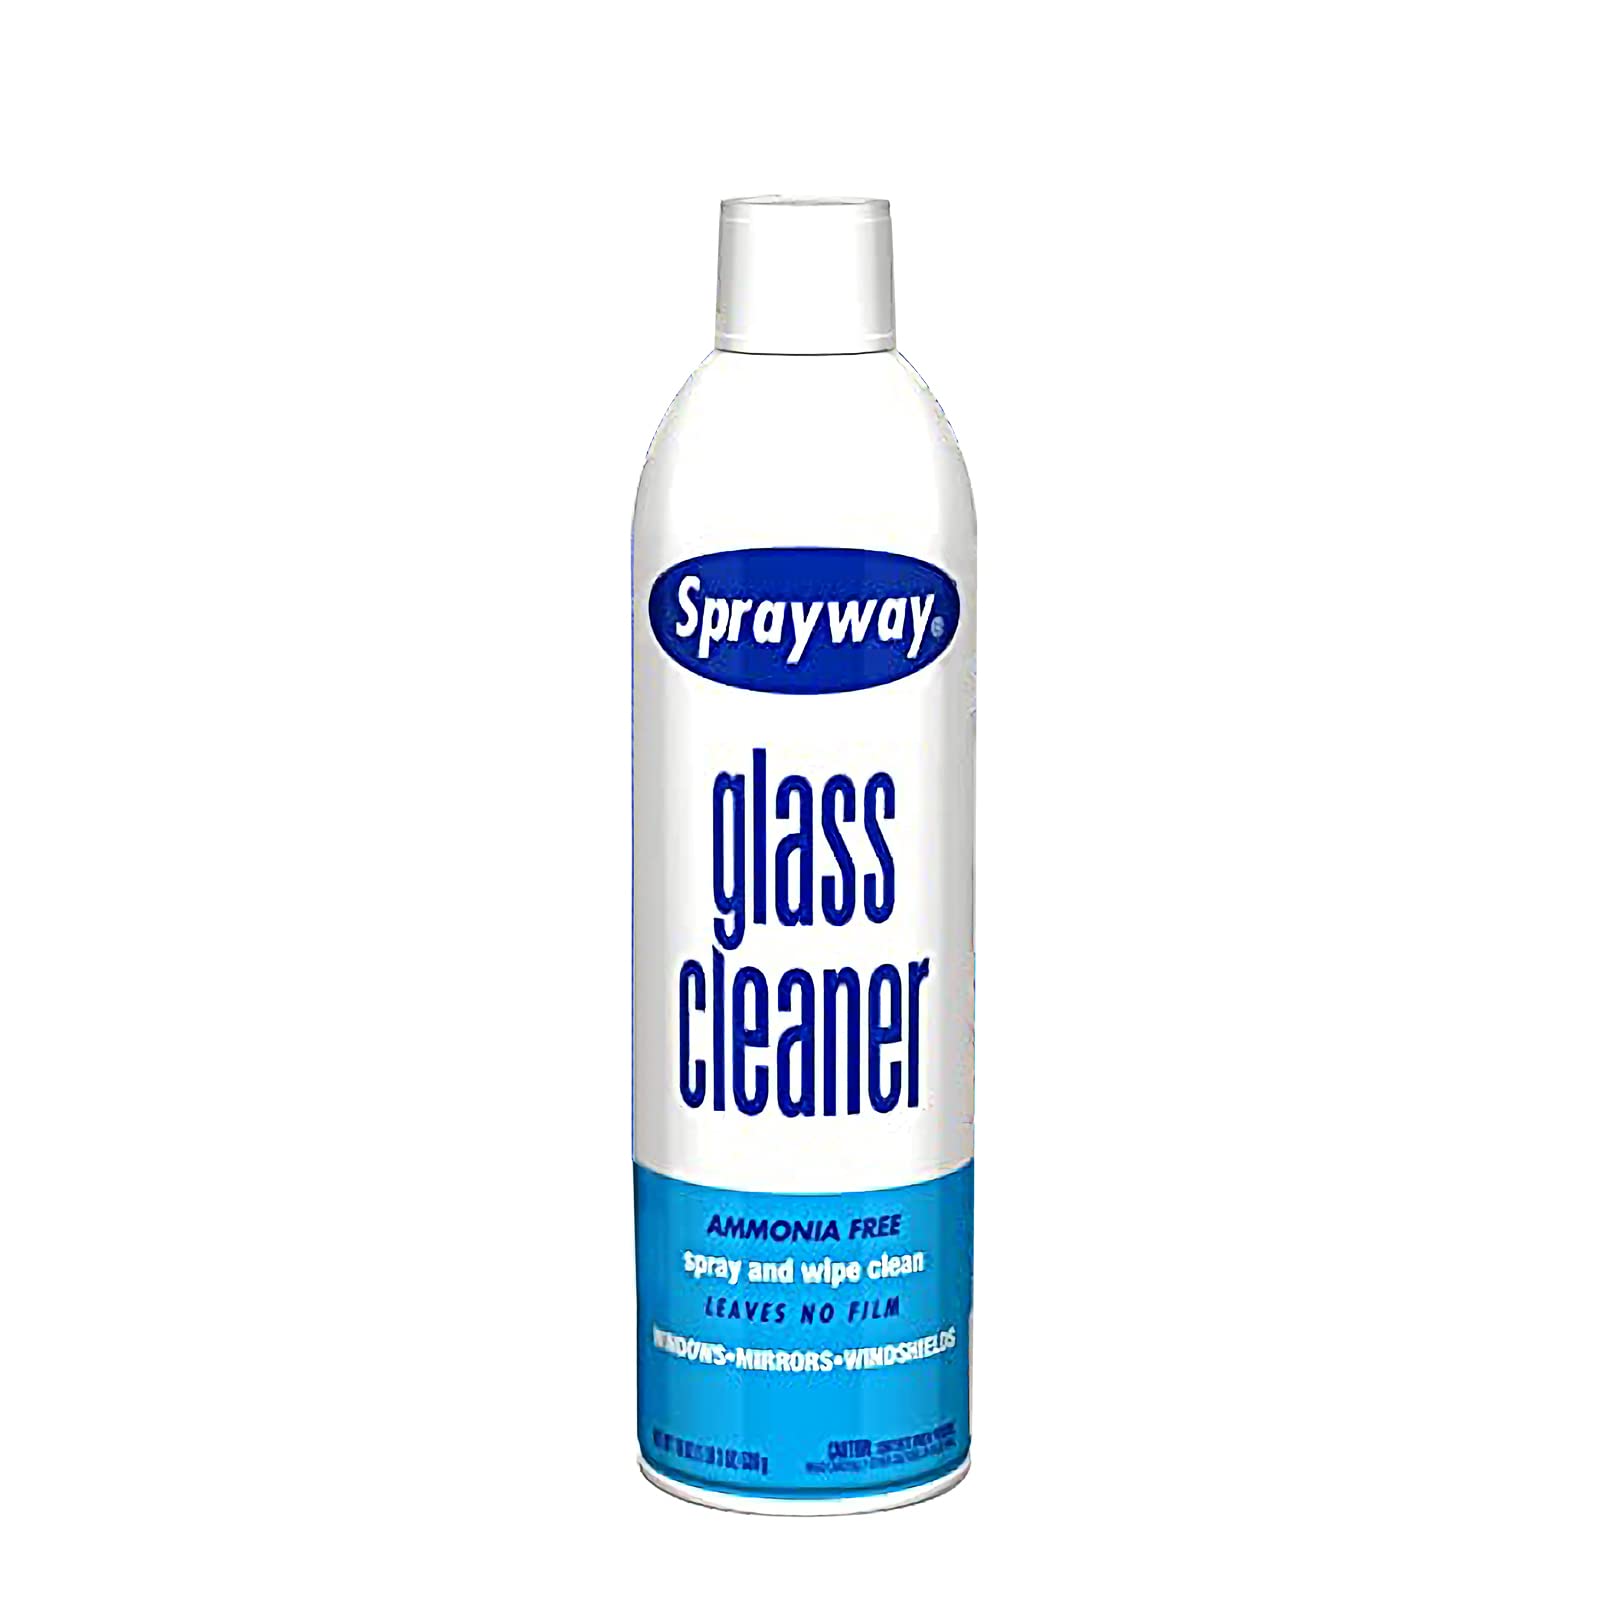 15-Oz. Sprayway Glass Cleaner Aerosol Spray $2.10 + Free Shipping w/ Prime or on $35+